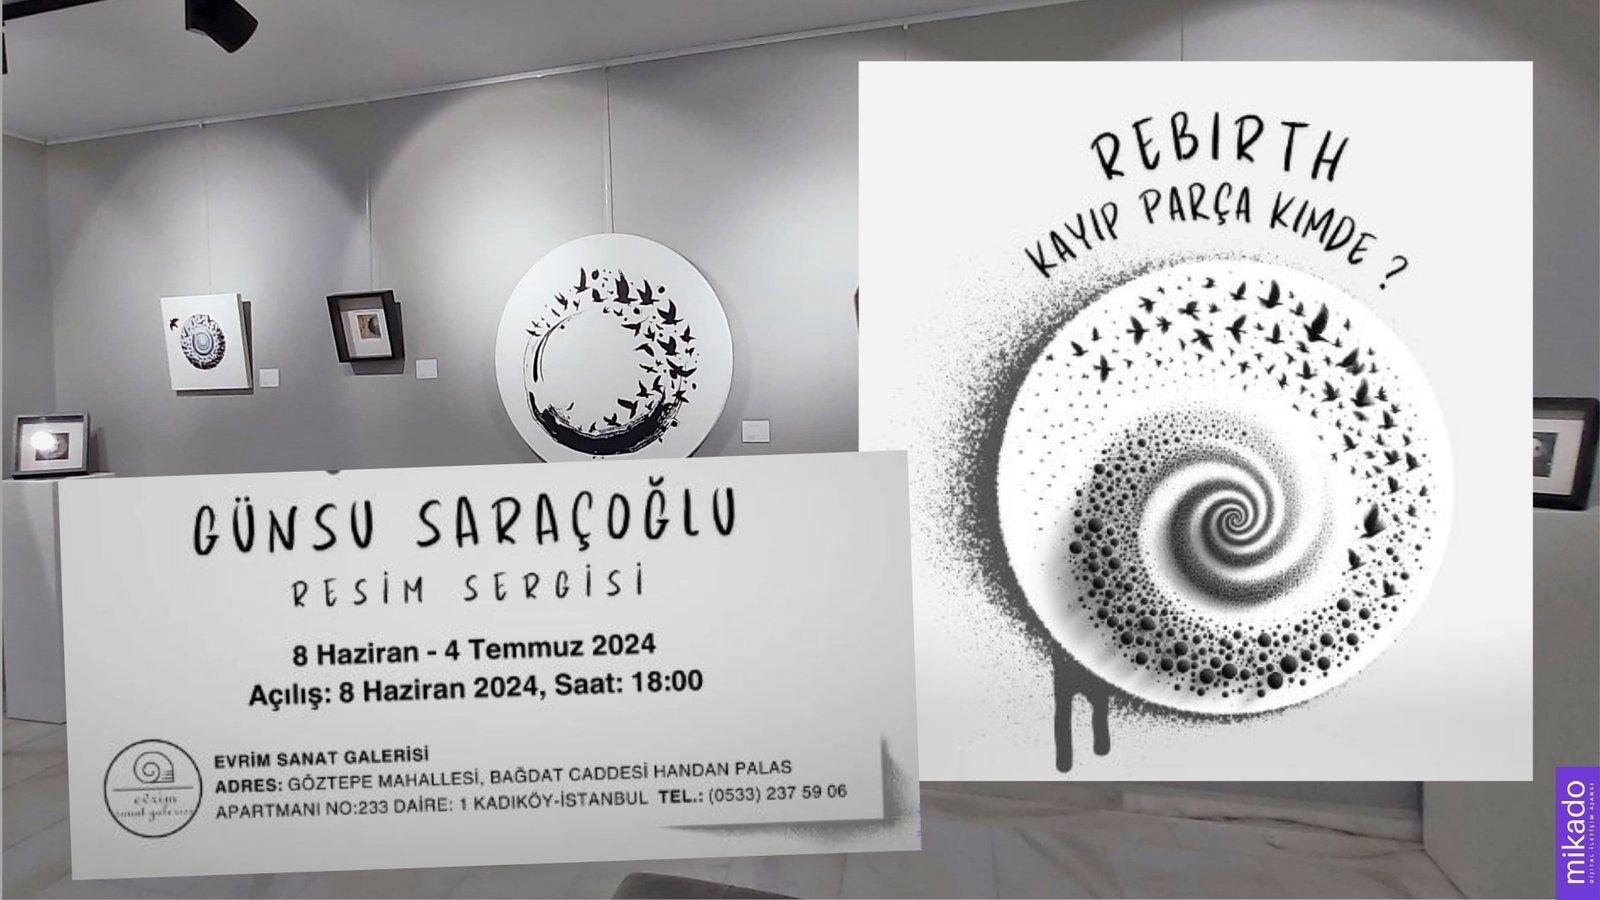 Günsu Saraçoğlu's Rebirth Collection Can Be Visited Until July 4th